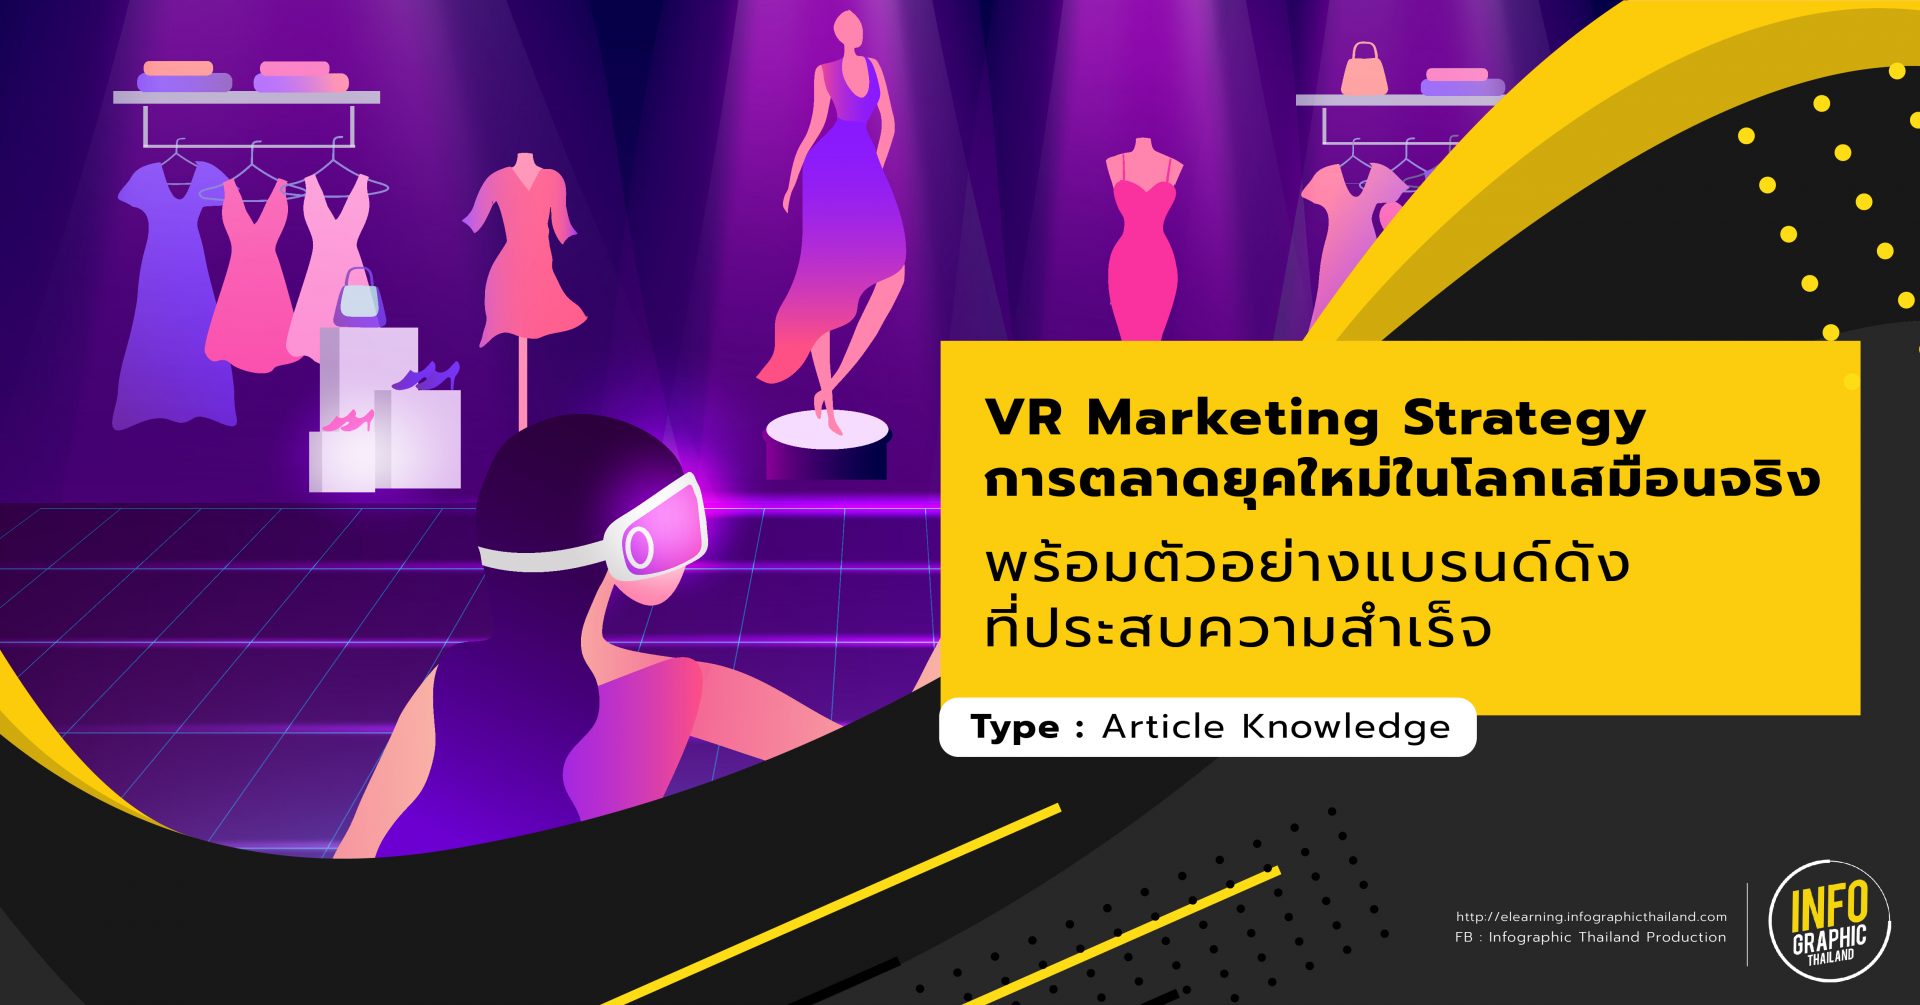 VR Marketing Strategy การตลาดยุคใหม่ในโลกเสมือนจริง พร้อมตัวอย่างแบรนด์ดังที่ประสบความสำเร็จ